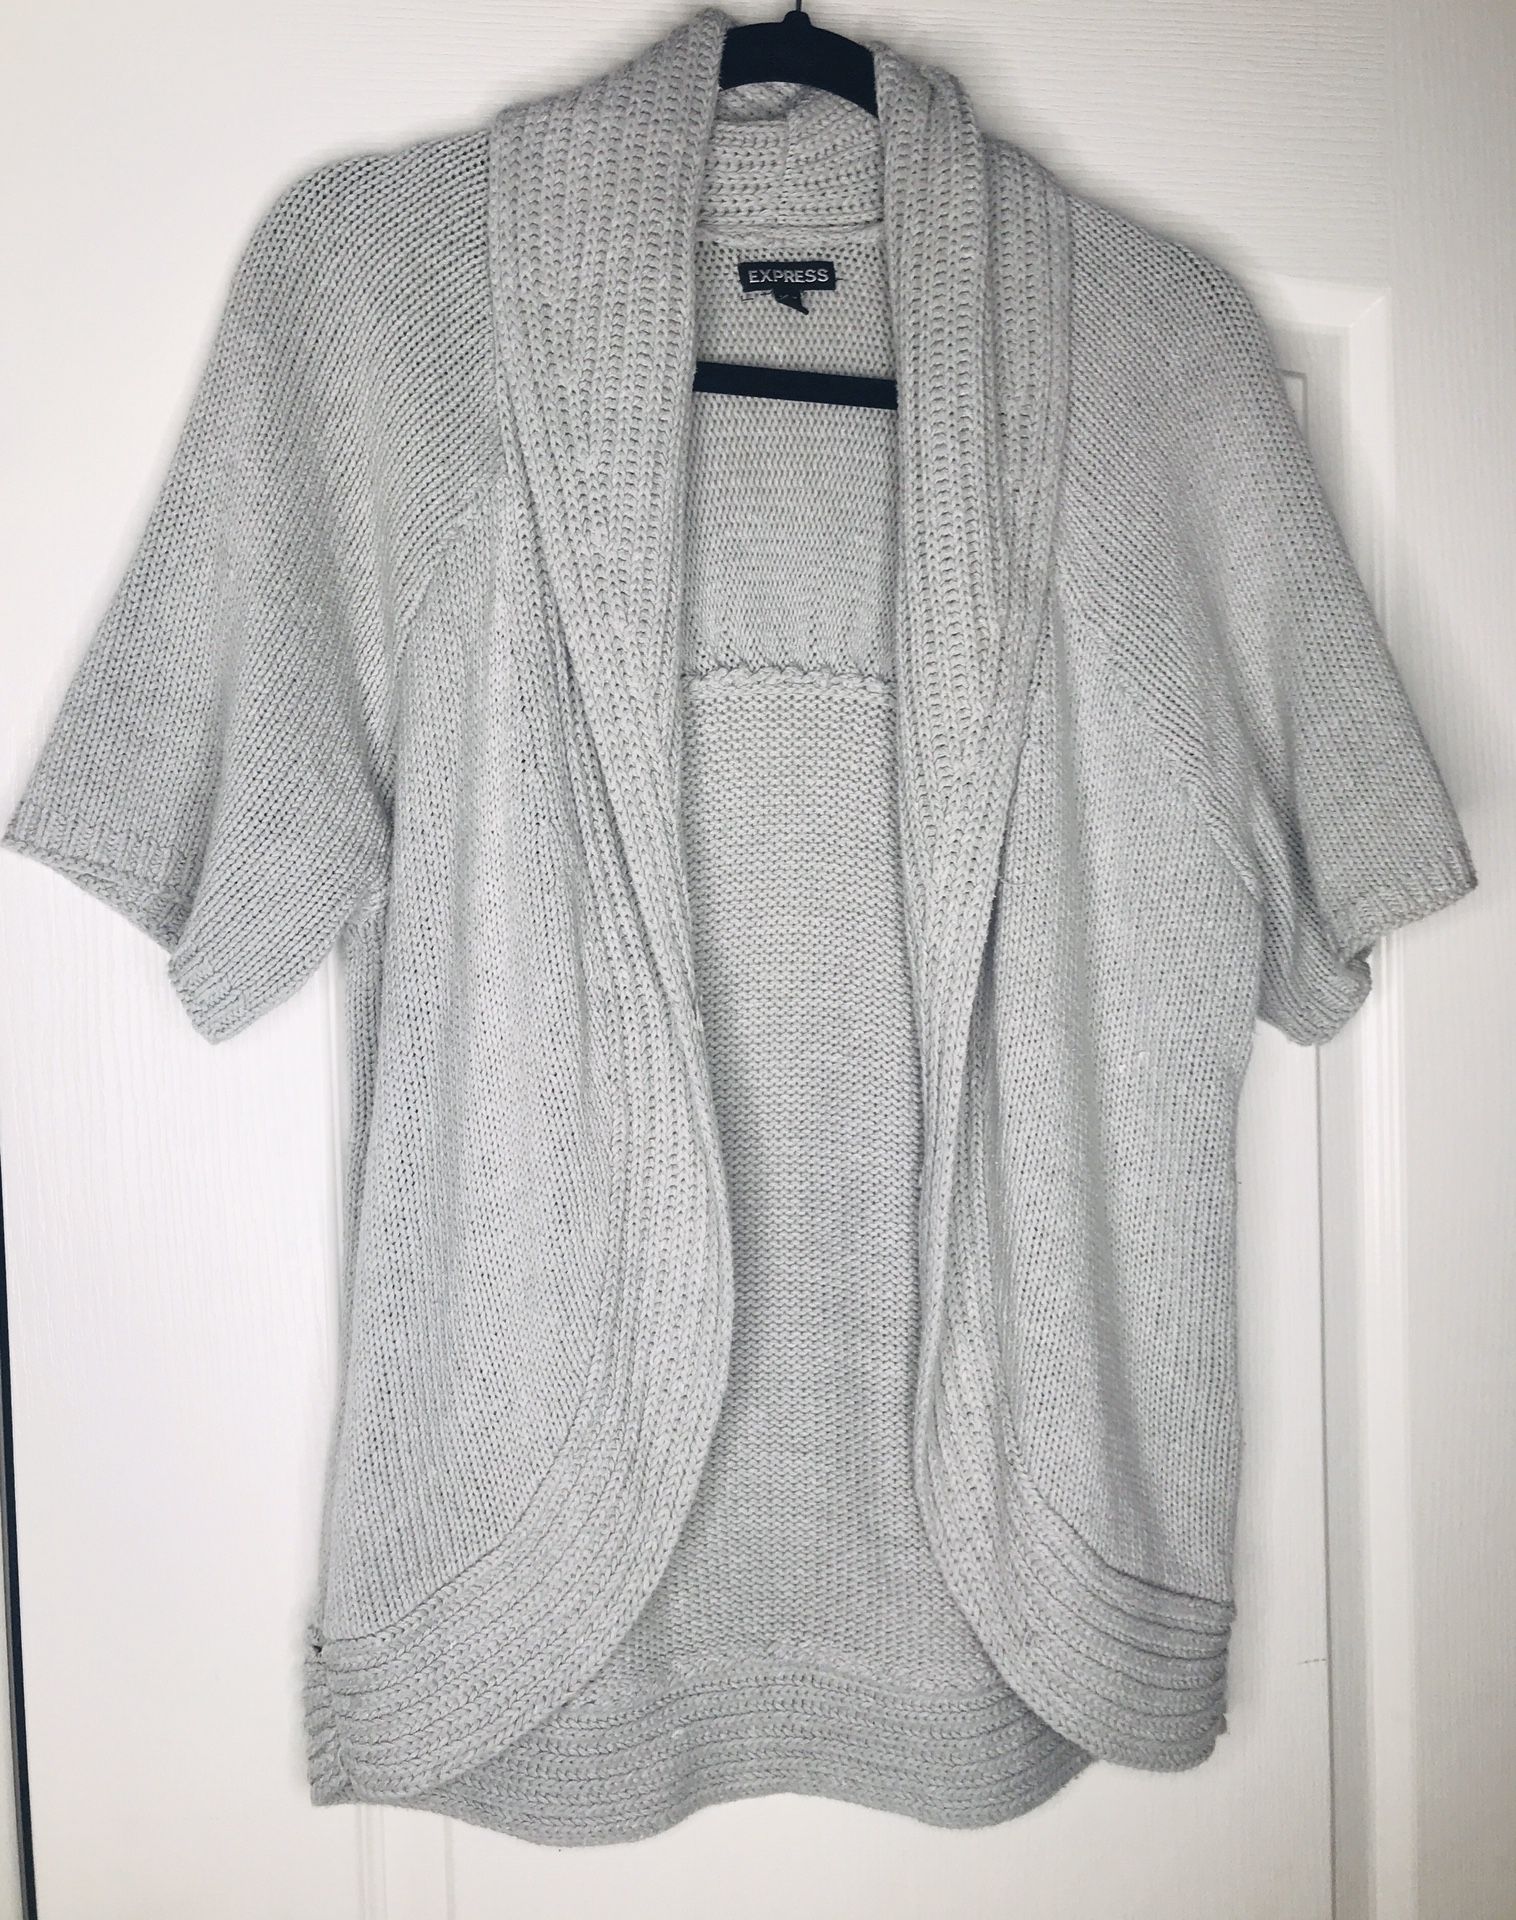 Express gray cardigan. Size: M